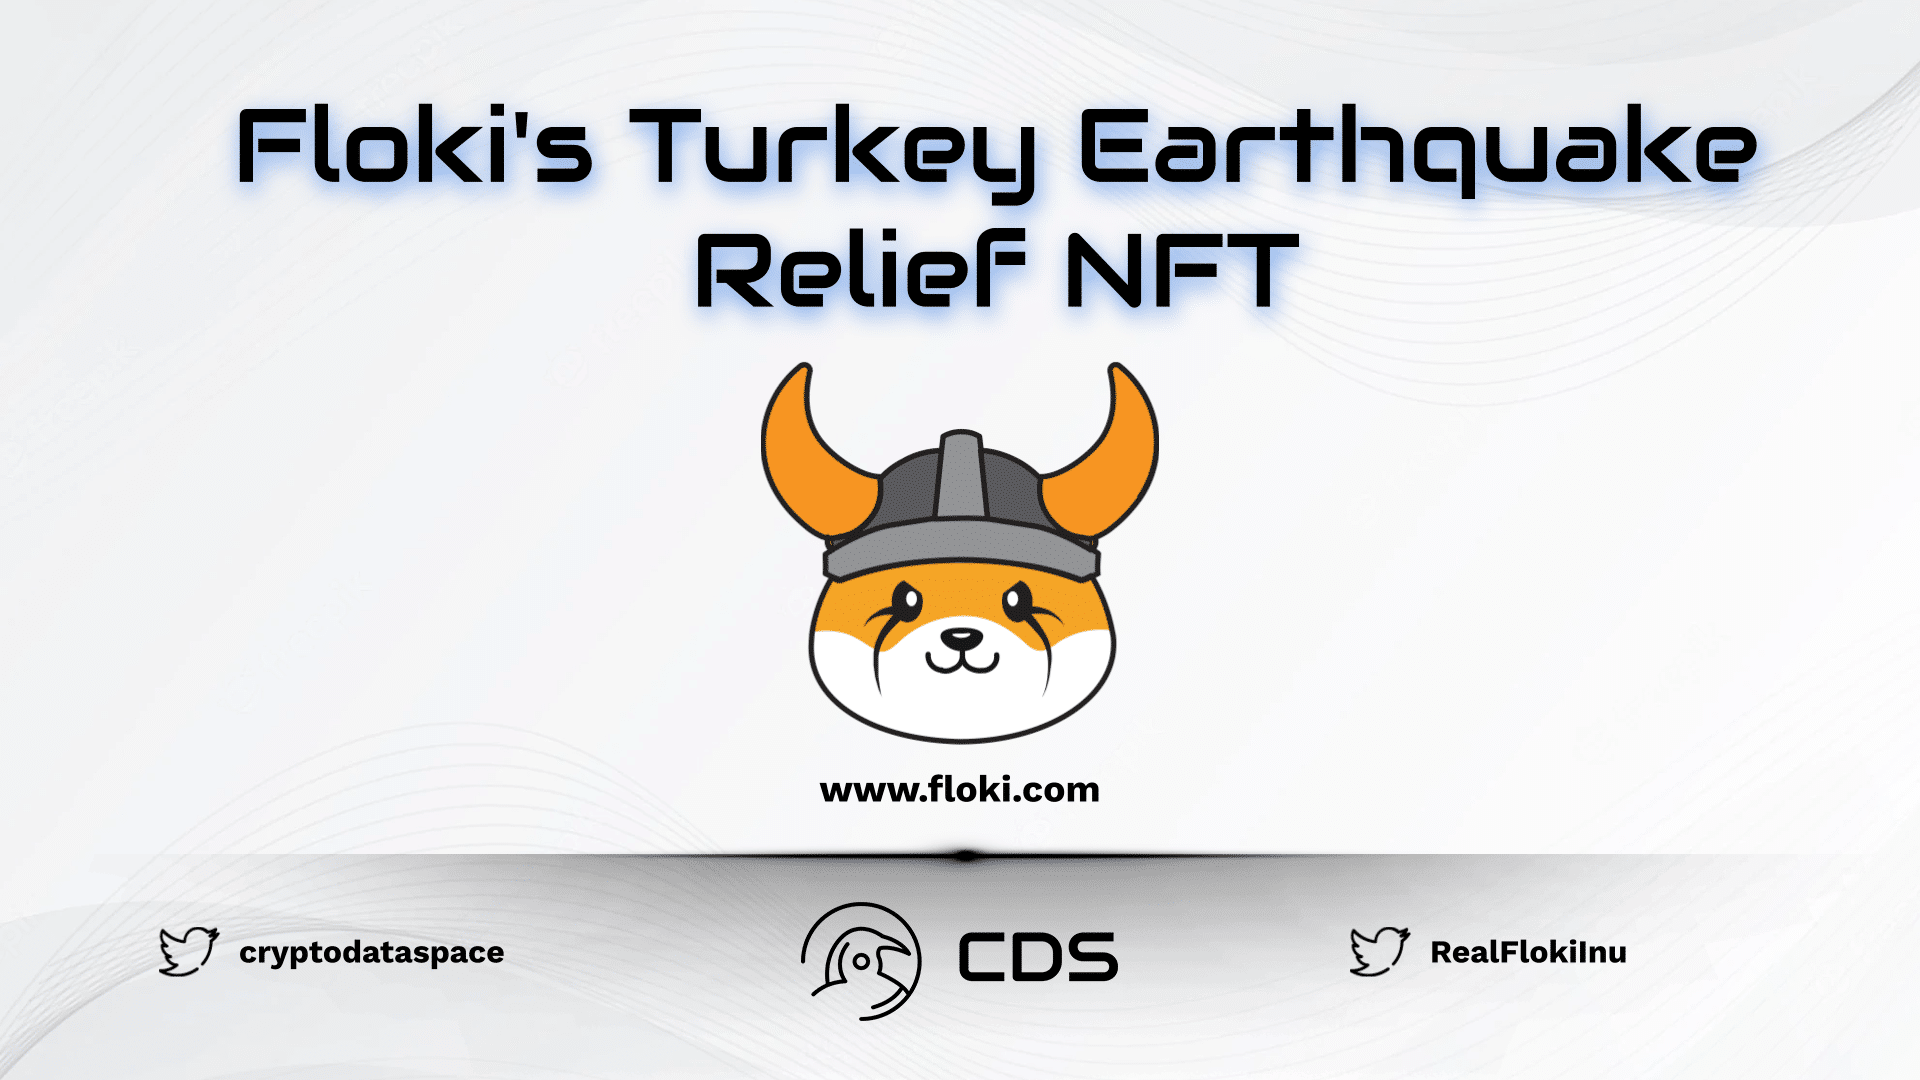 Floki's Turkey Earthquake Relief NFT